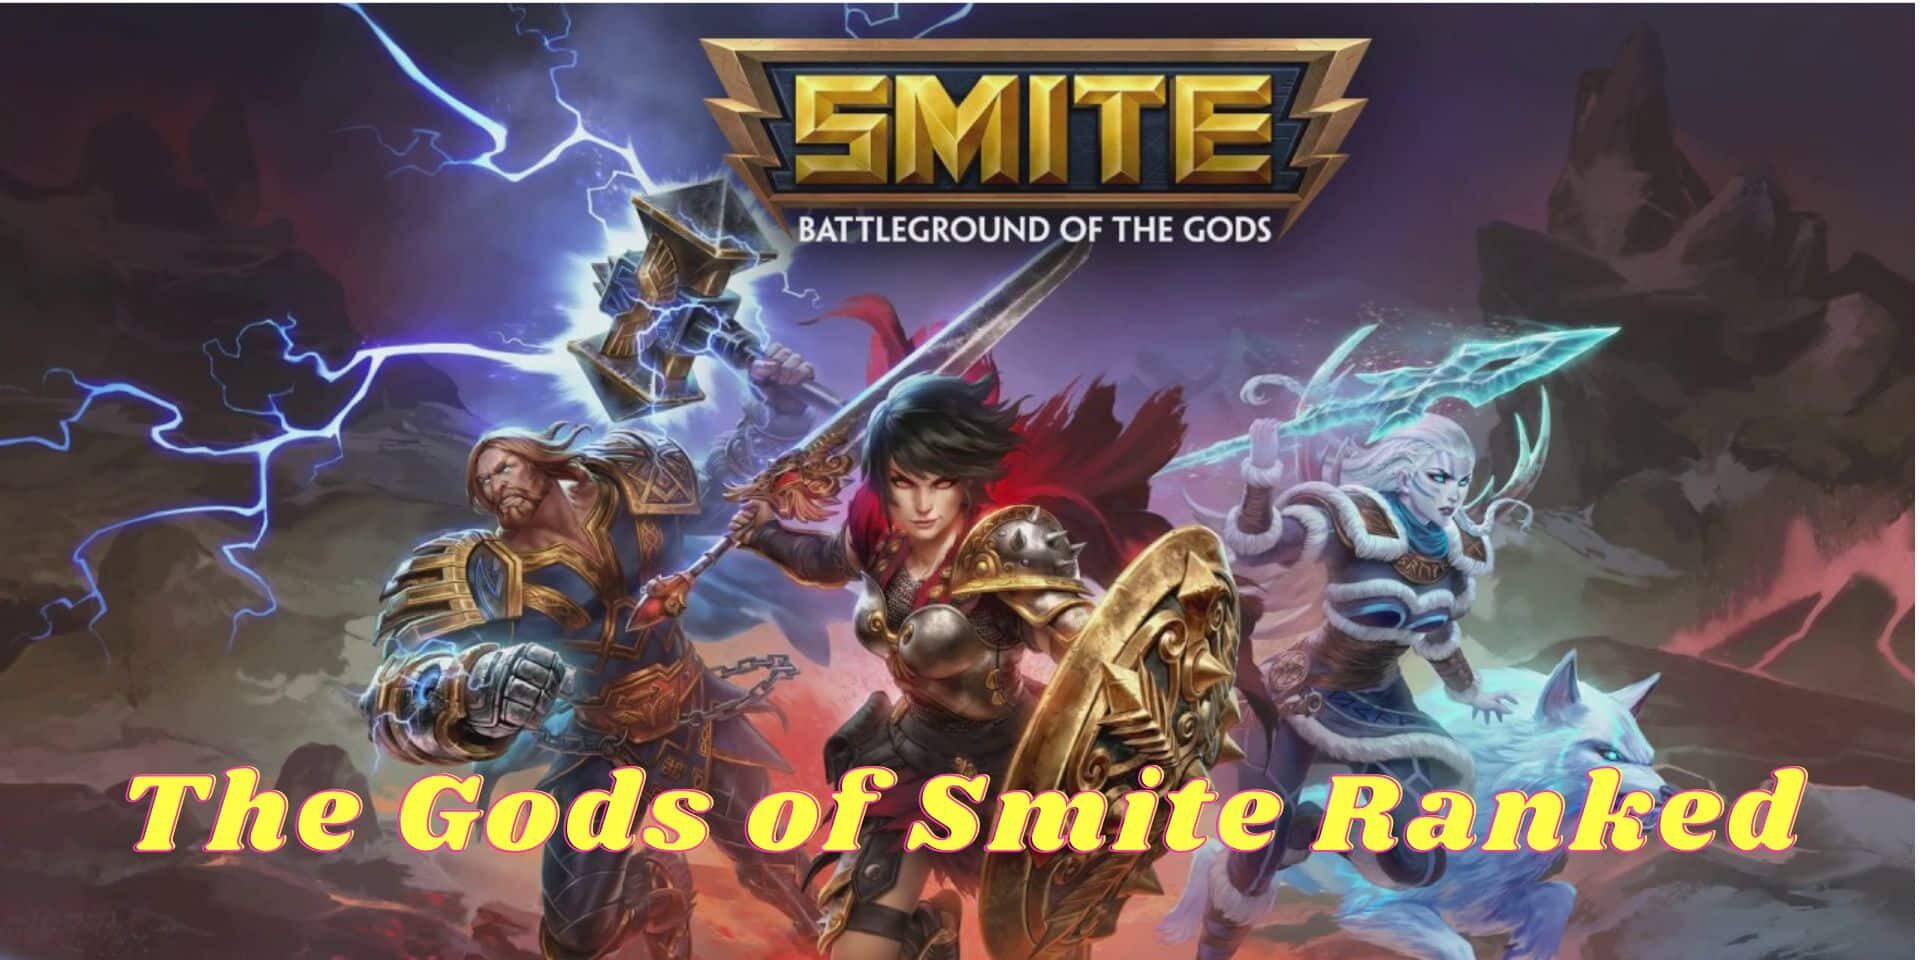 The Gods of Smite Ranked aspect ratio 2 1